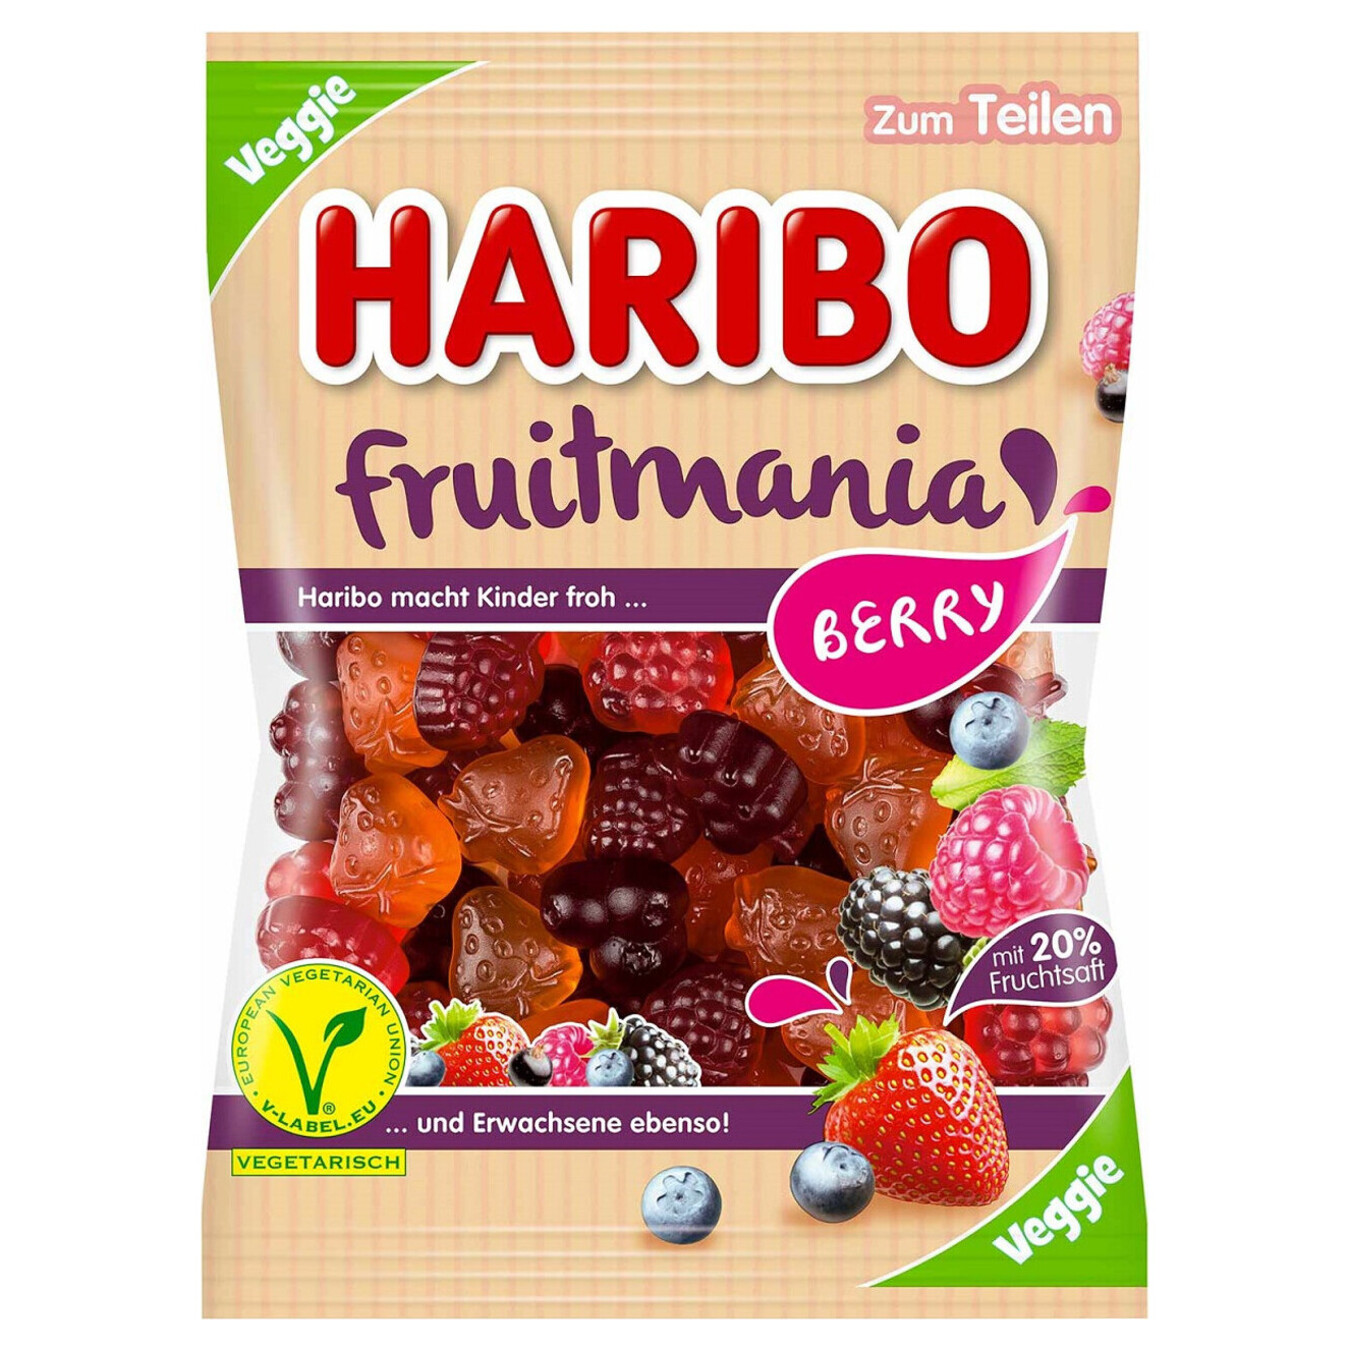 Jelly candies Haribo frutmania-berries 160g